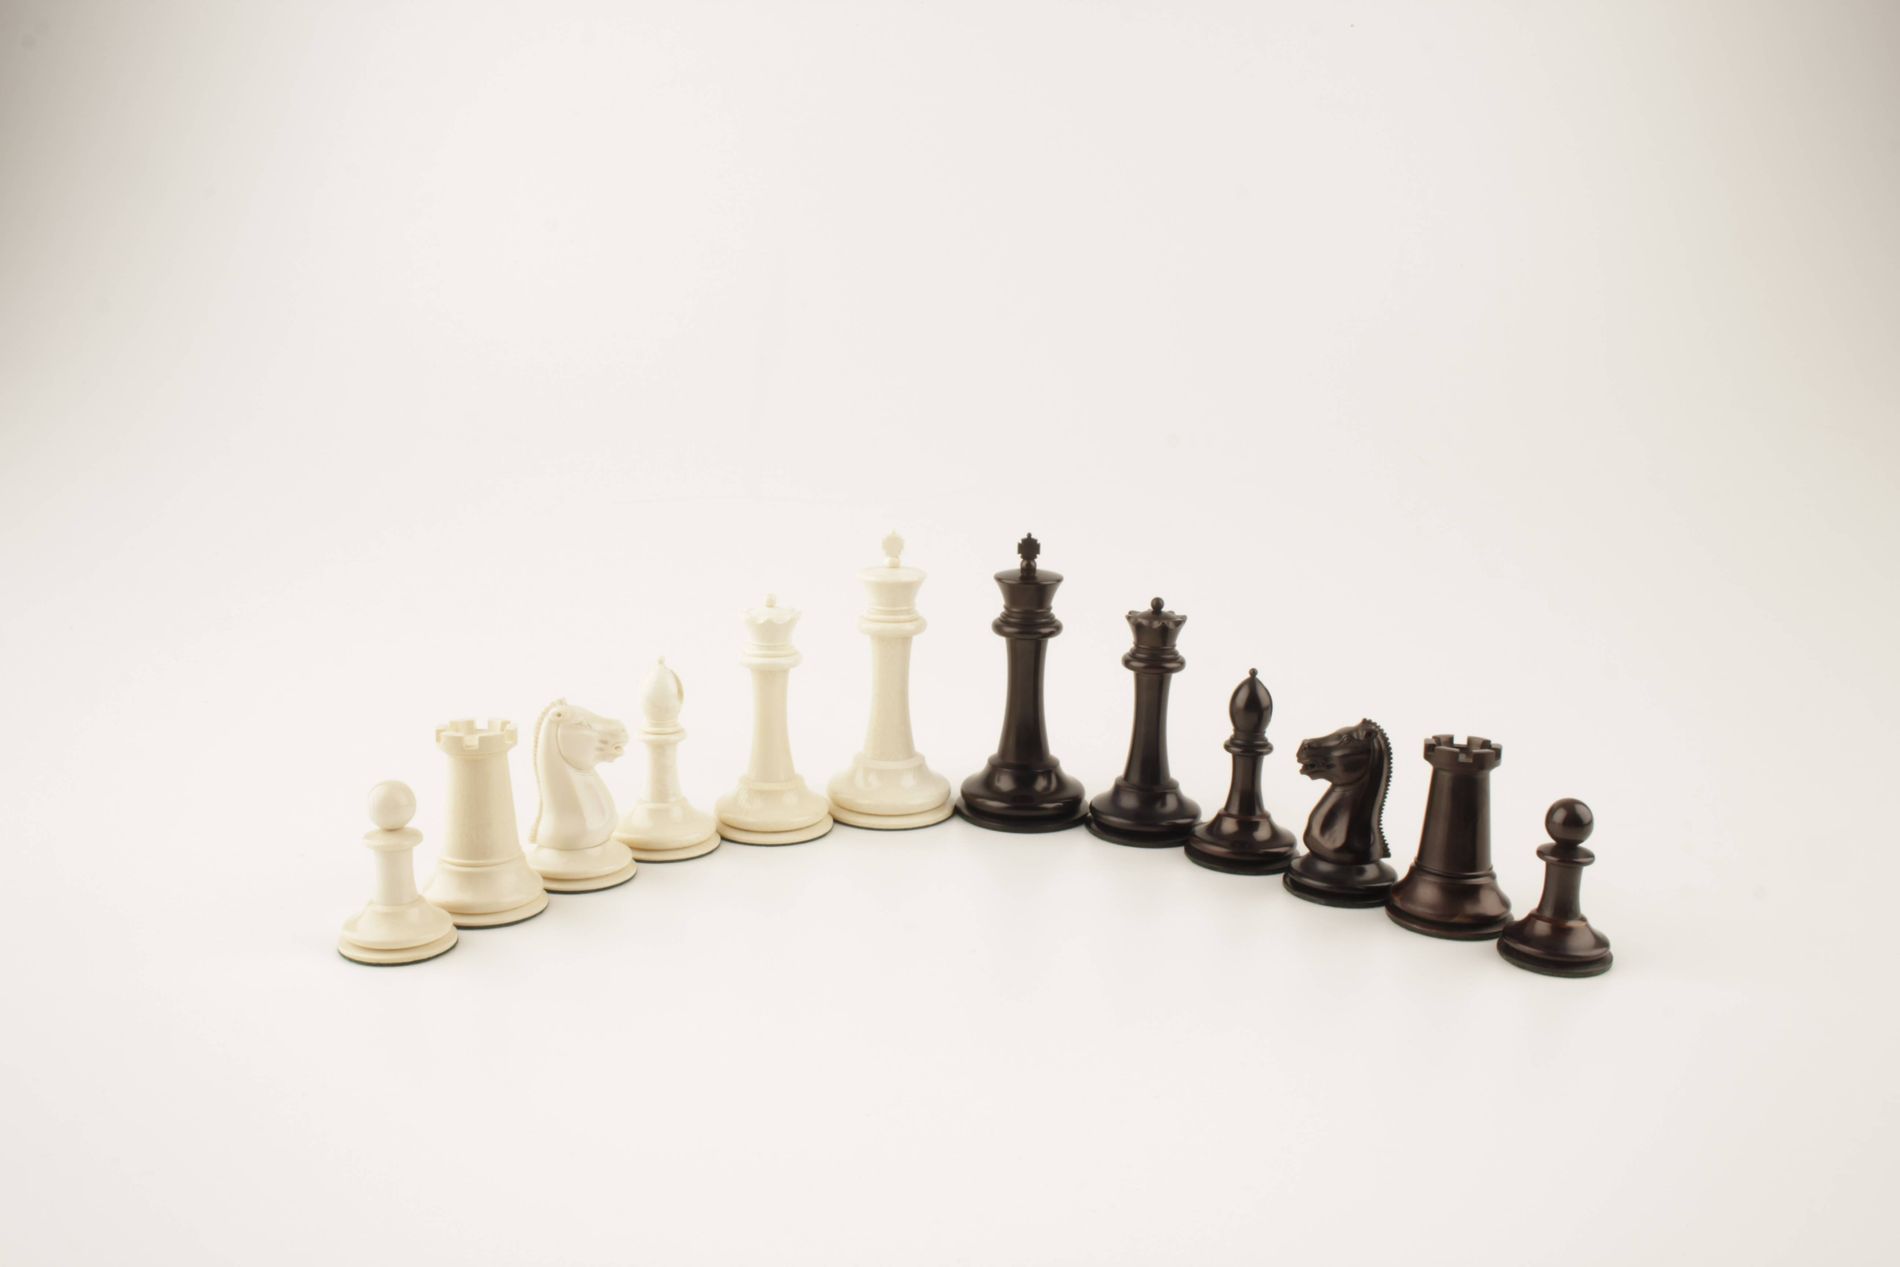 Mammoth ivory chess set